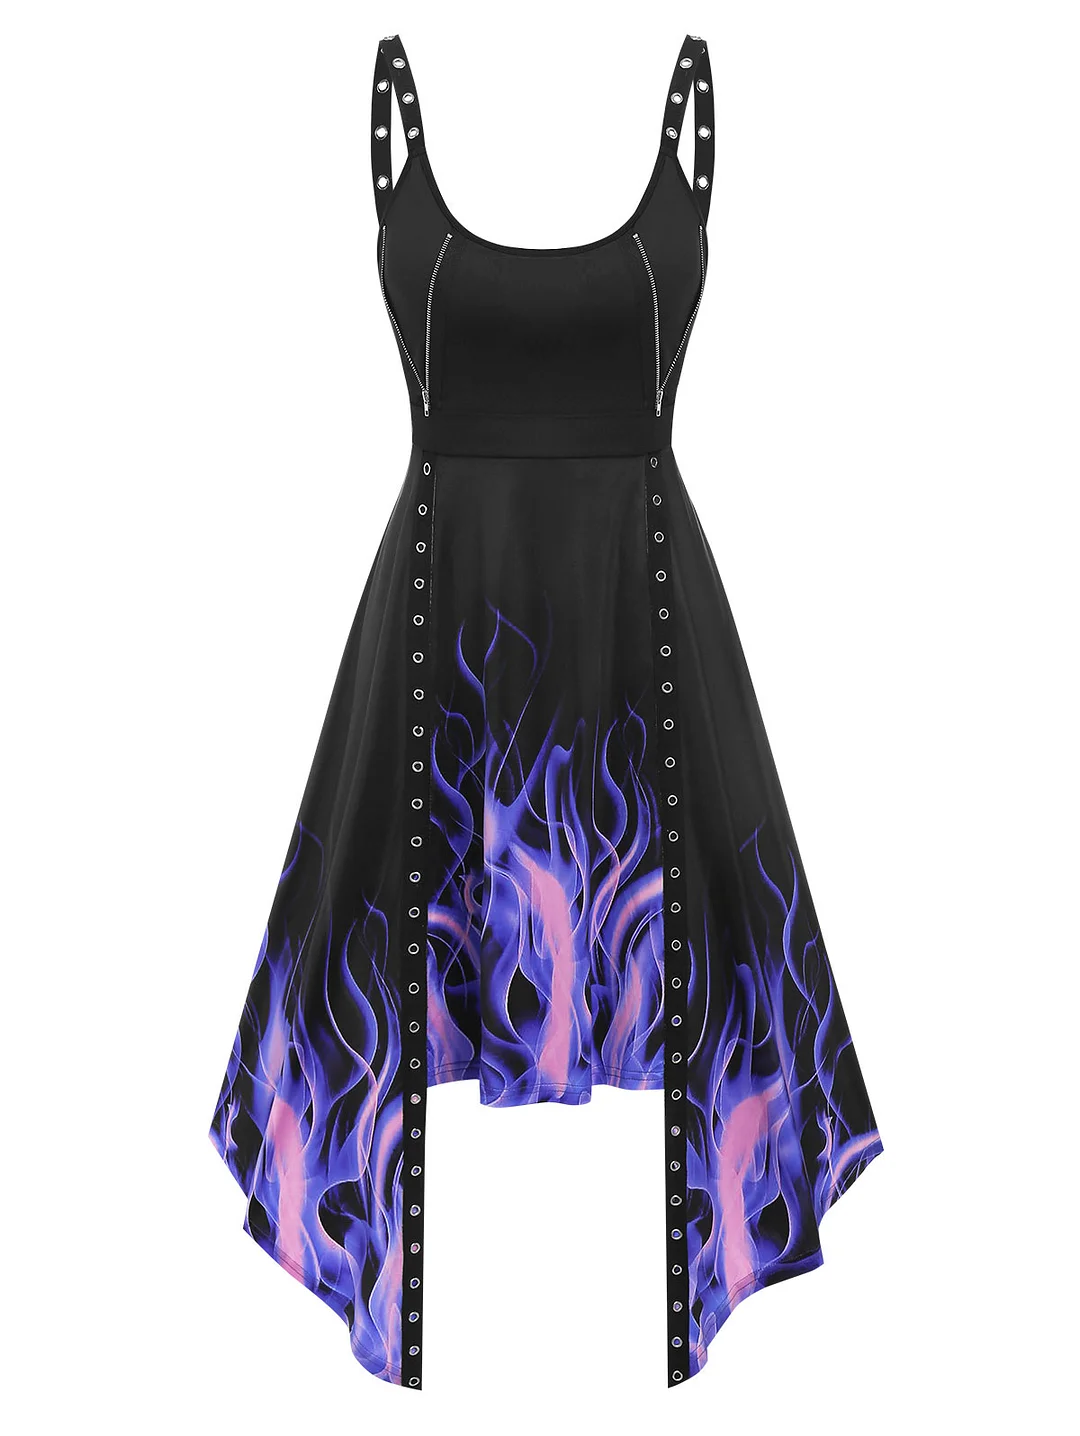 Zingj Fire Print Eyelets Asymmetric Dress Irregular Zippered Gothic Jurken Streetwear Femme Dresses